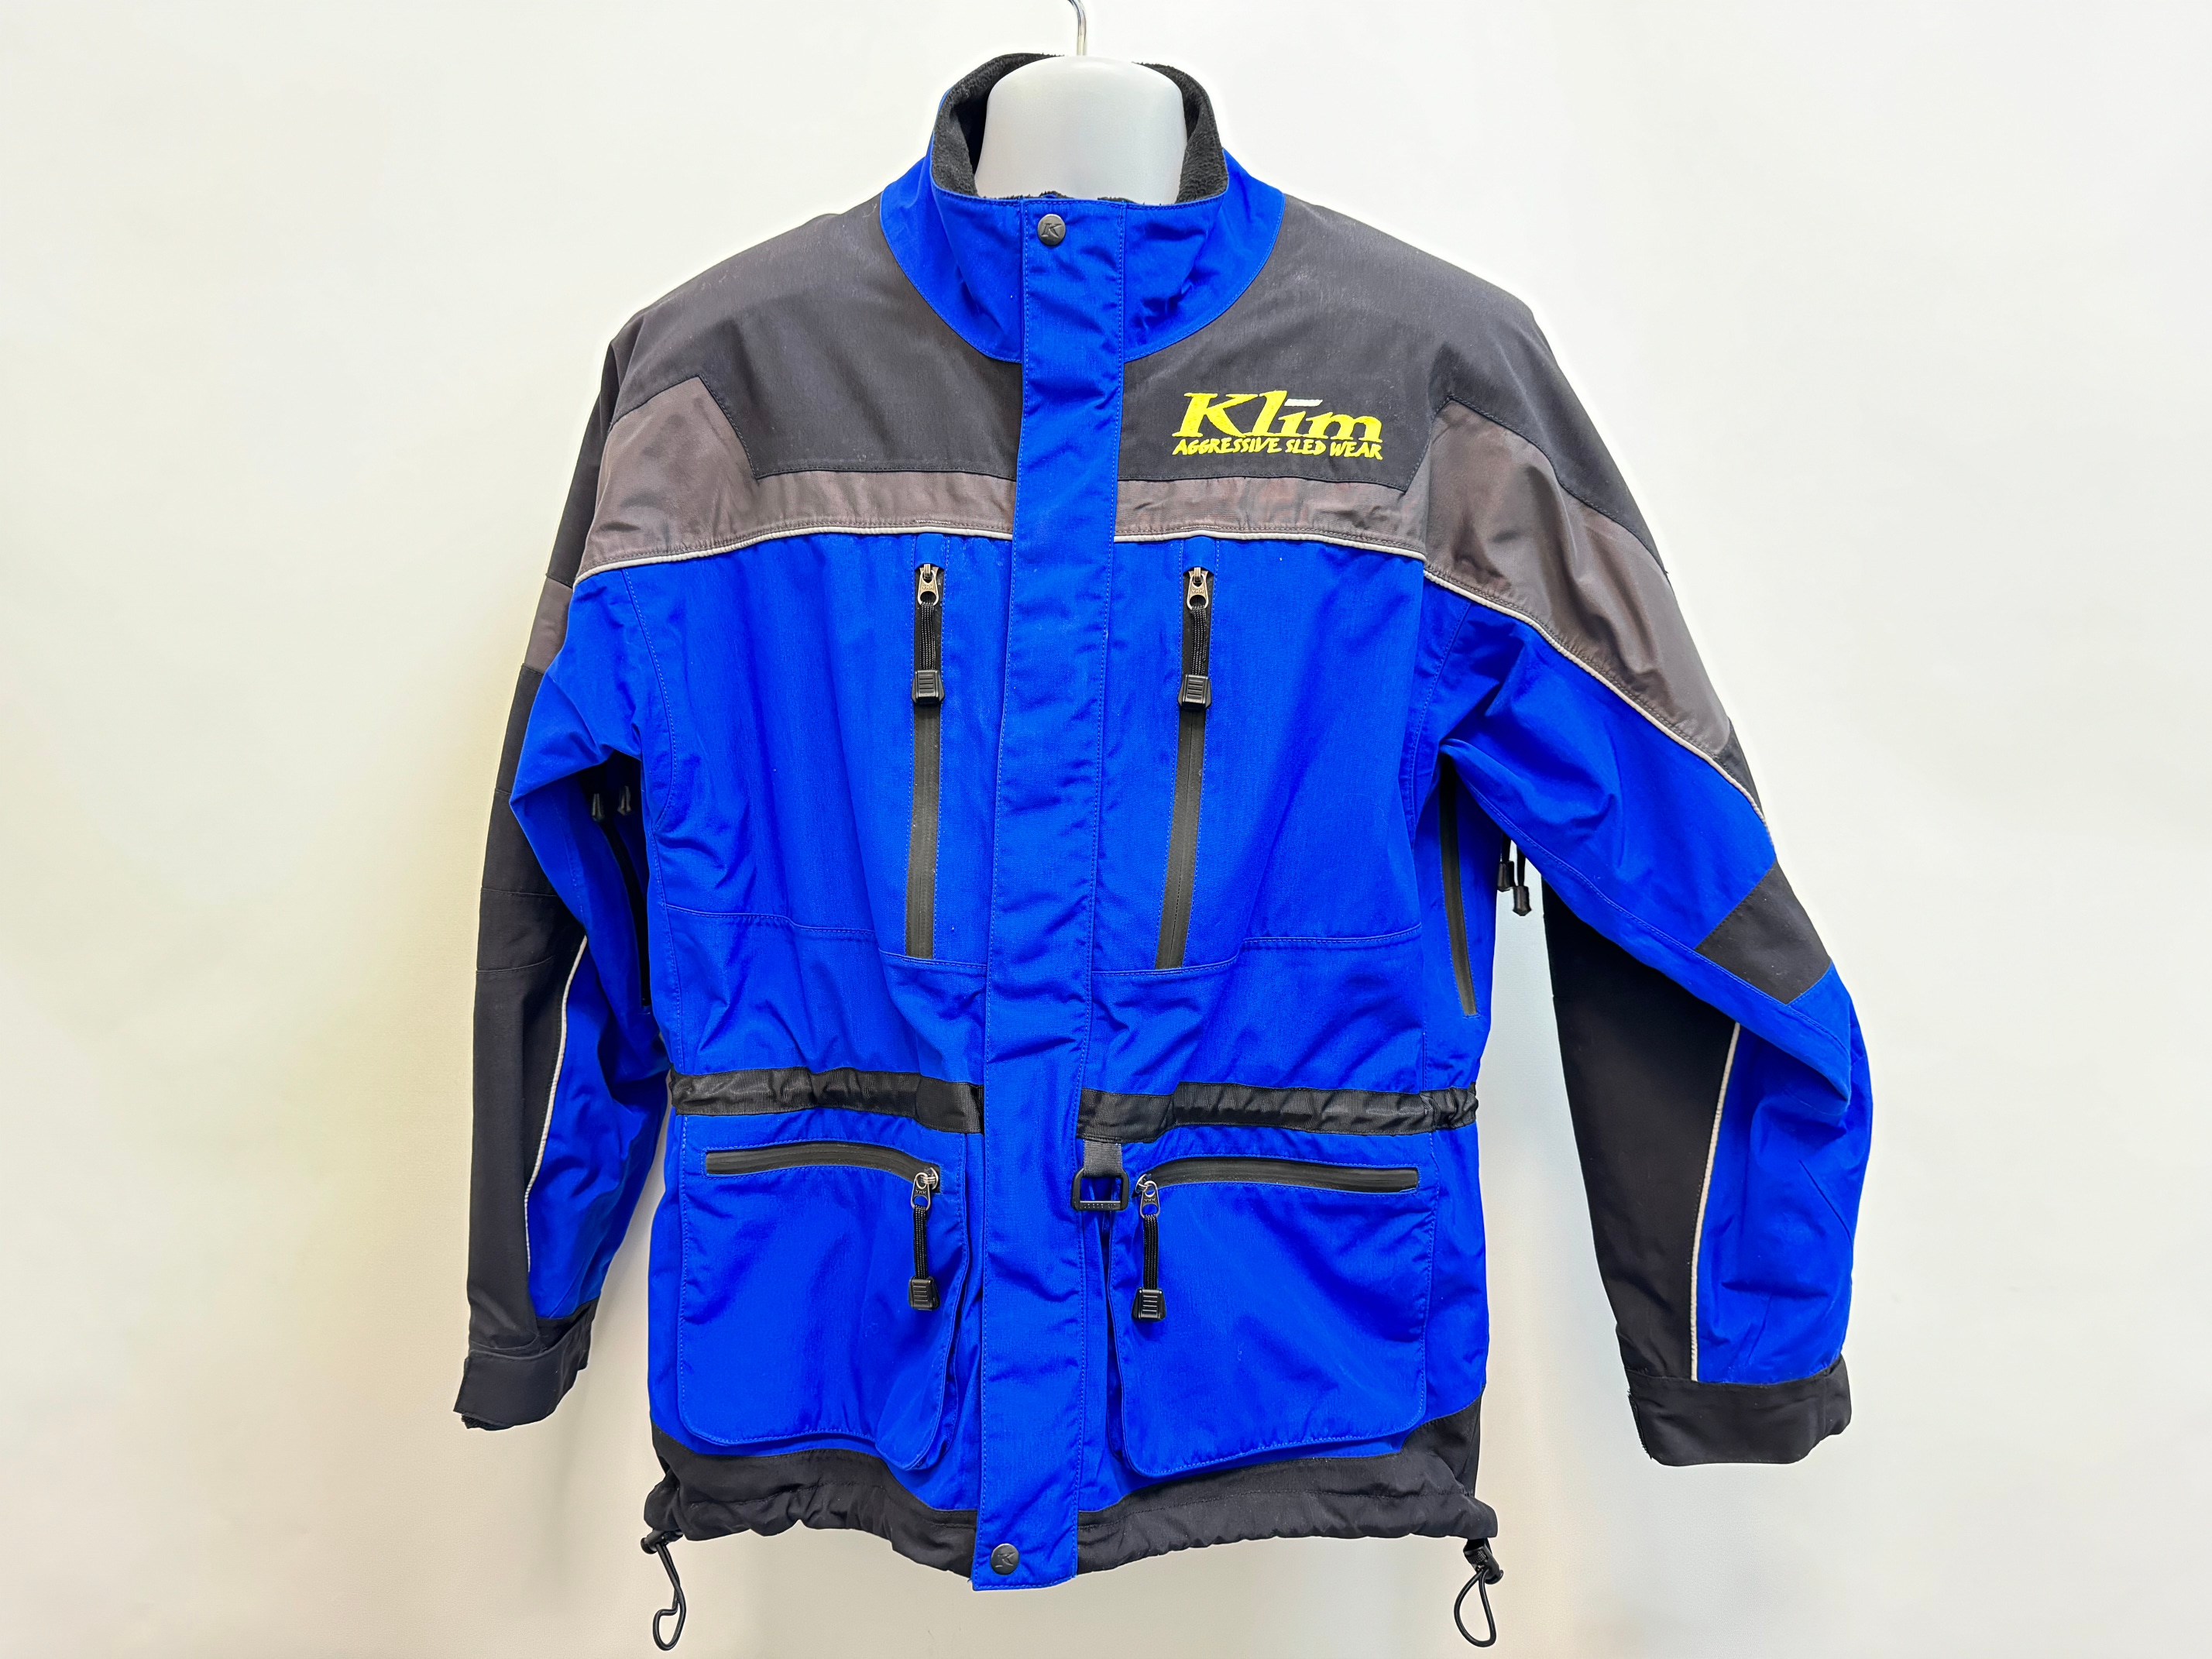 Klim GORE-TEX XCR Large Snowmobile Jacket